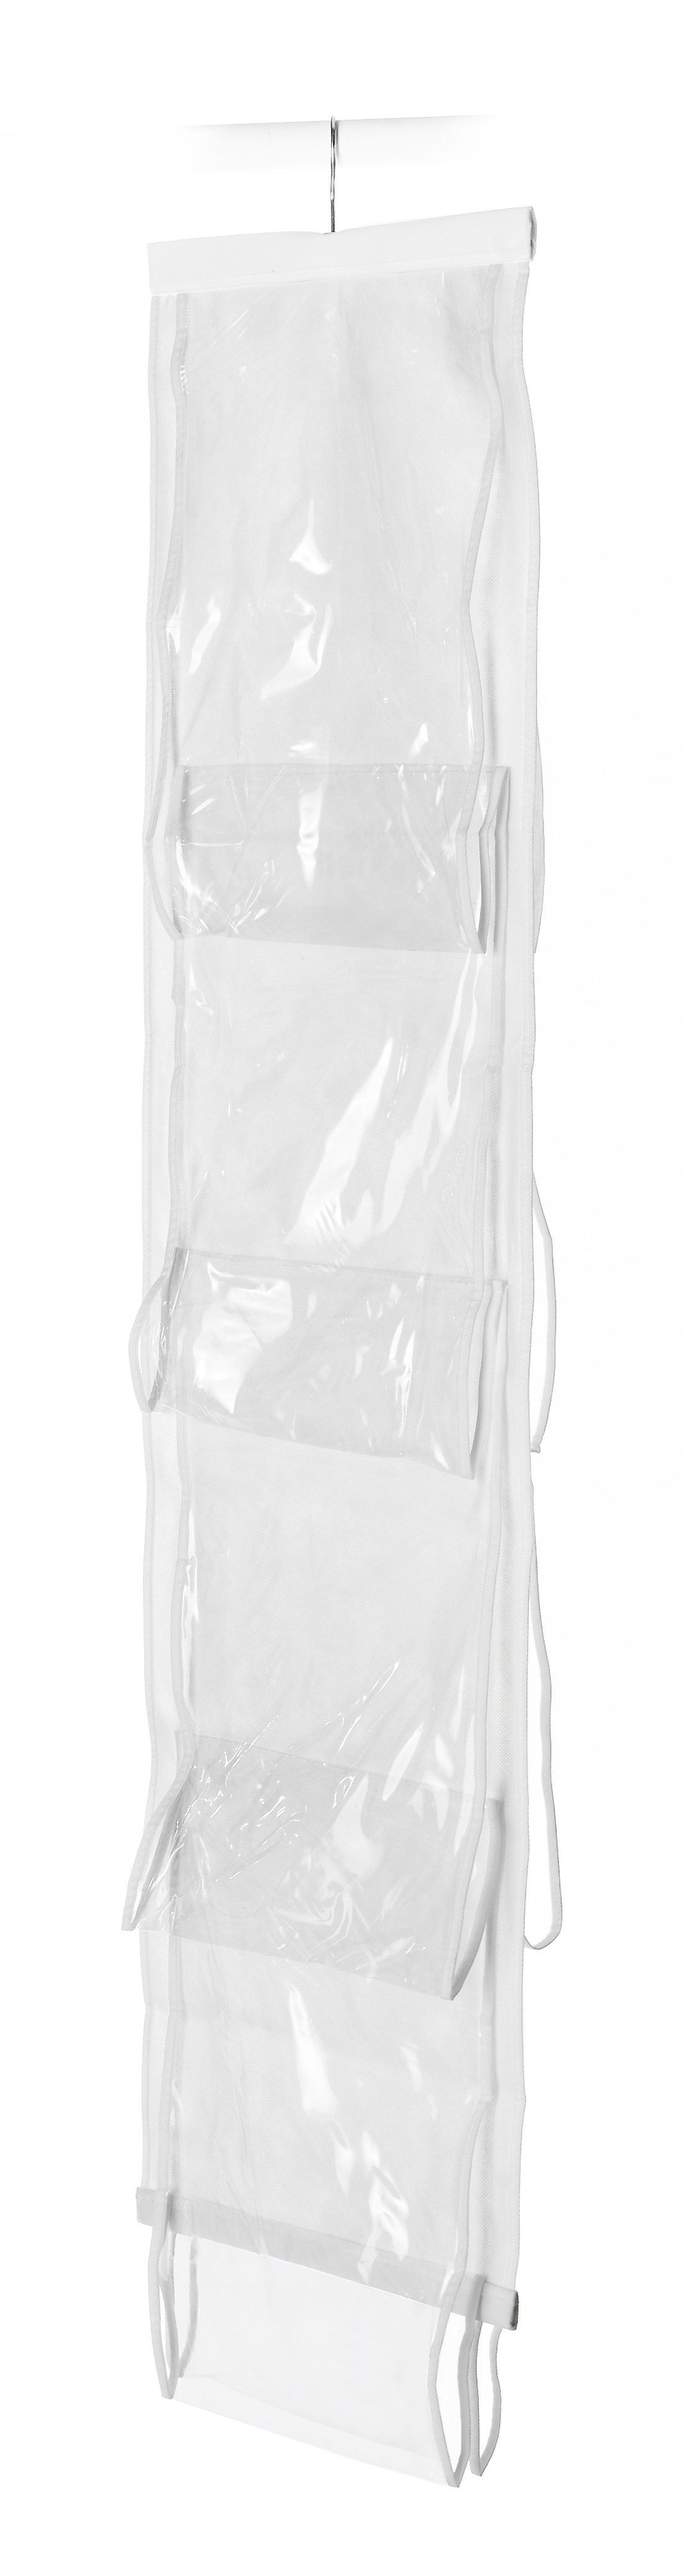 Whitmor 4-Tier Hanging Handbag File Organizer - Clear - 12" x 48" - image 1 of 9